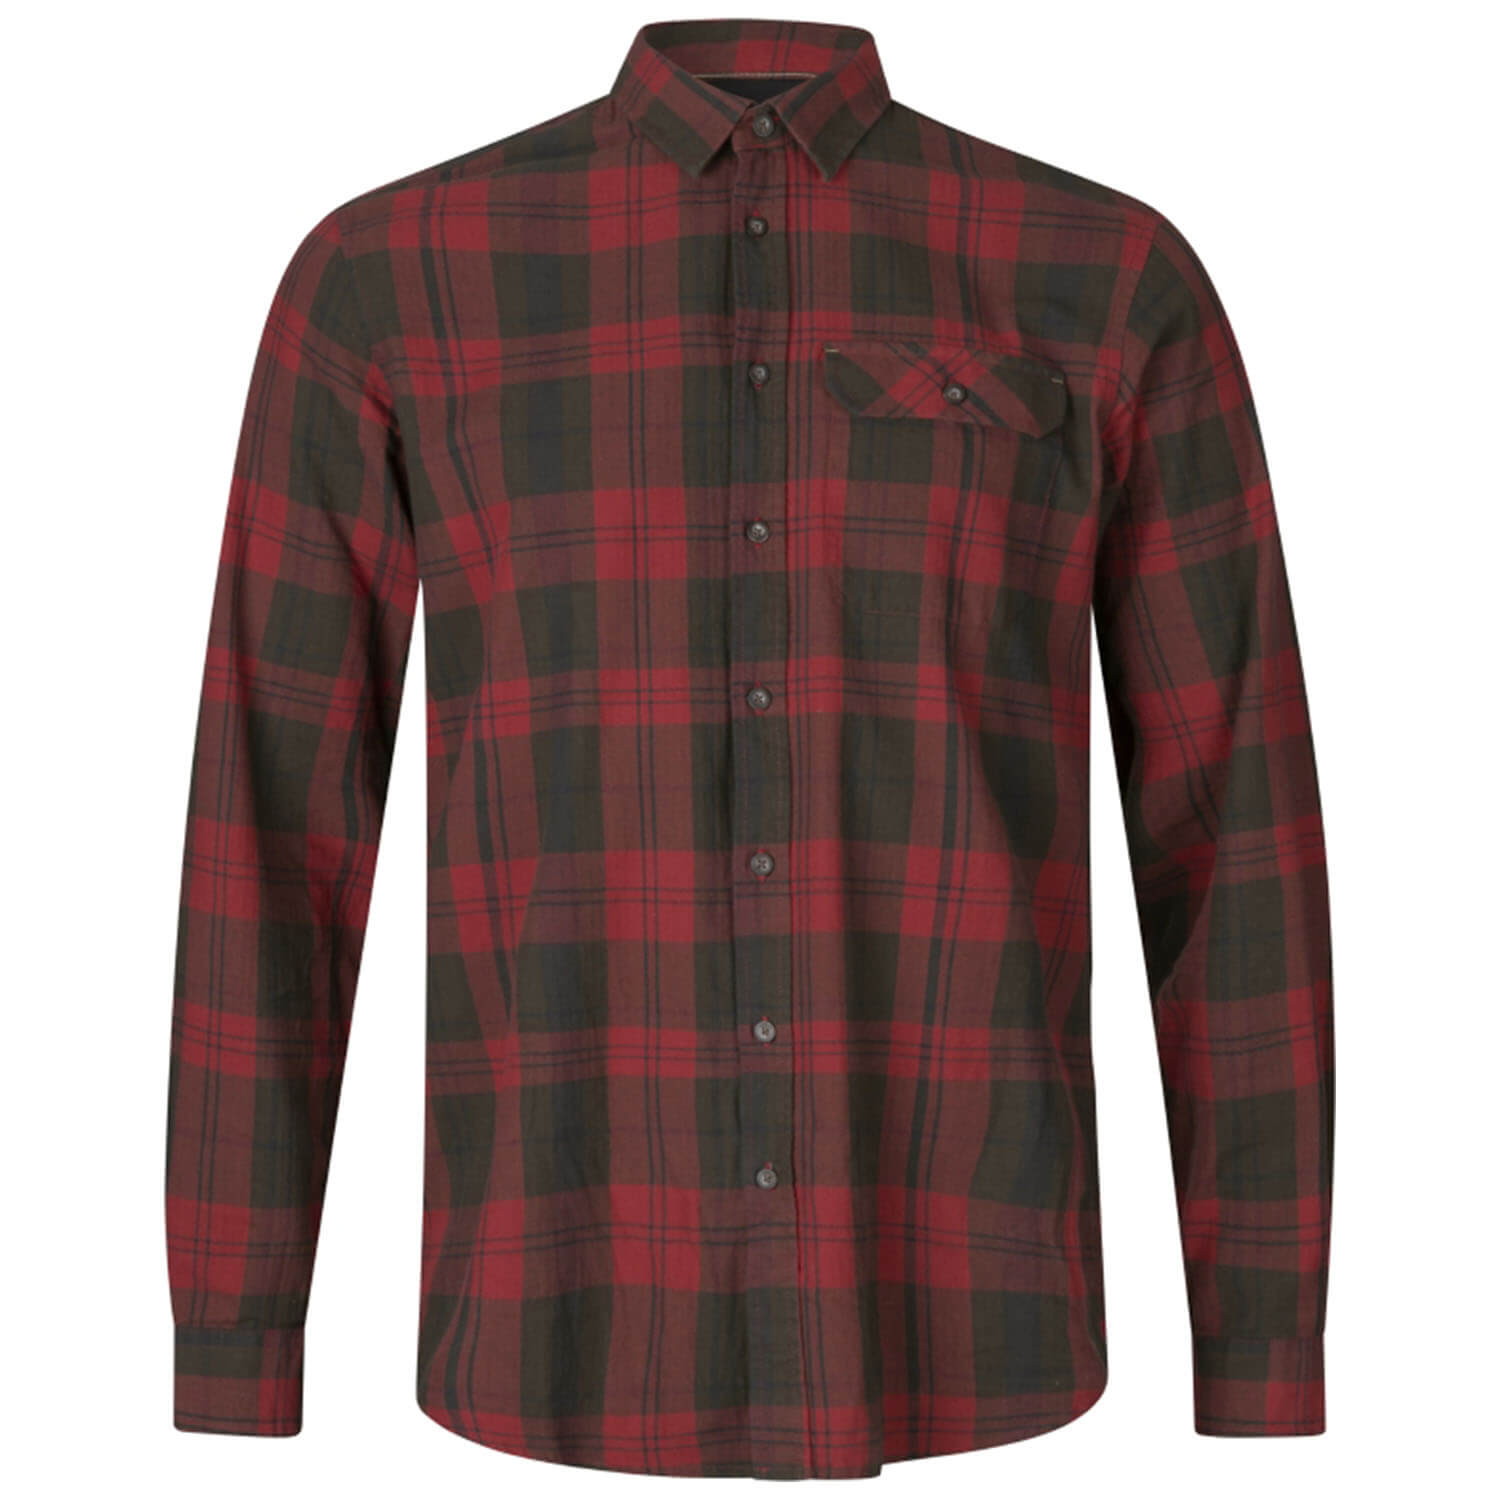  Seeland Jachthemd Highseat (Rode Woudruit) - Overhemden